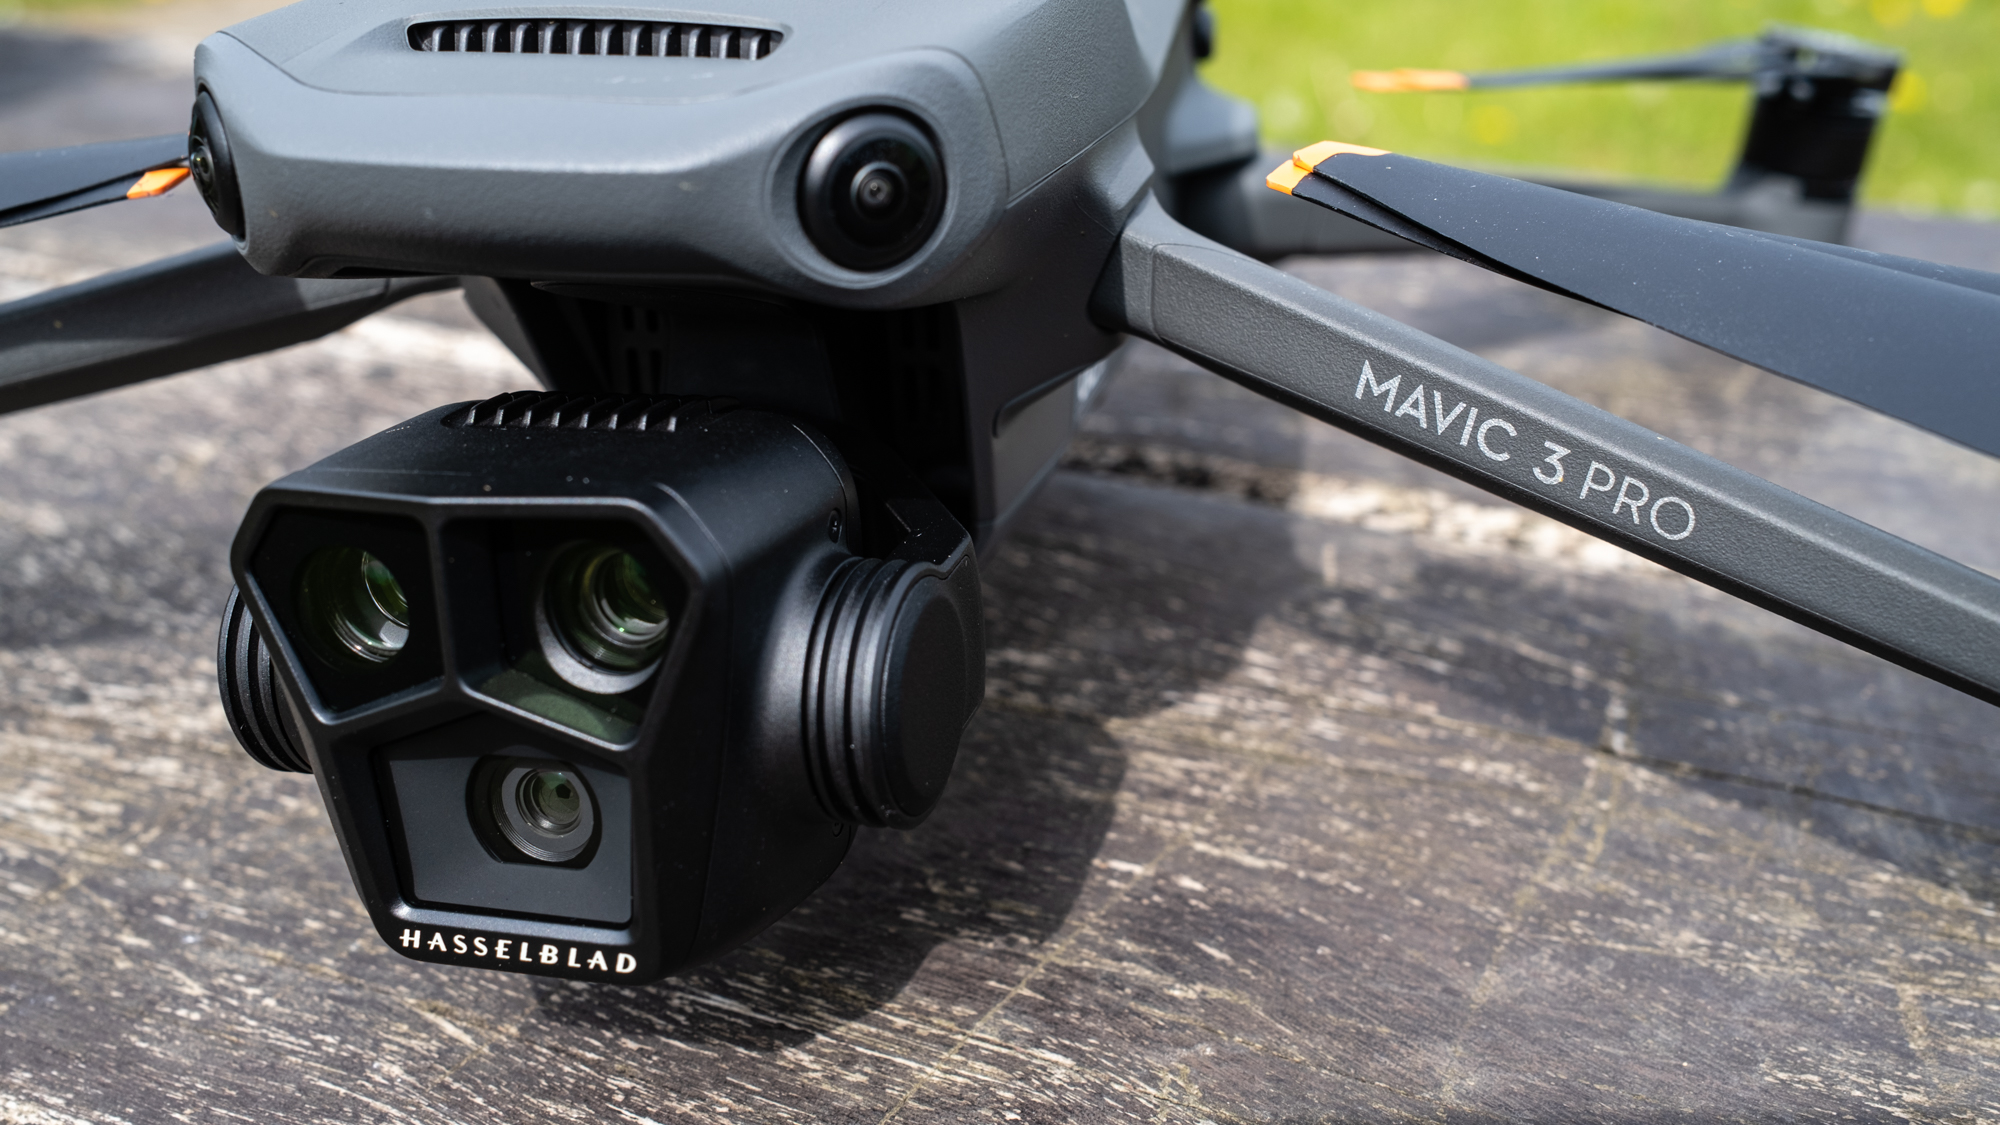 DJI Mavic 3 Pro drone close up of three cameras